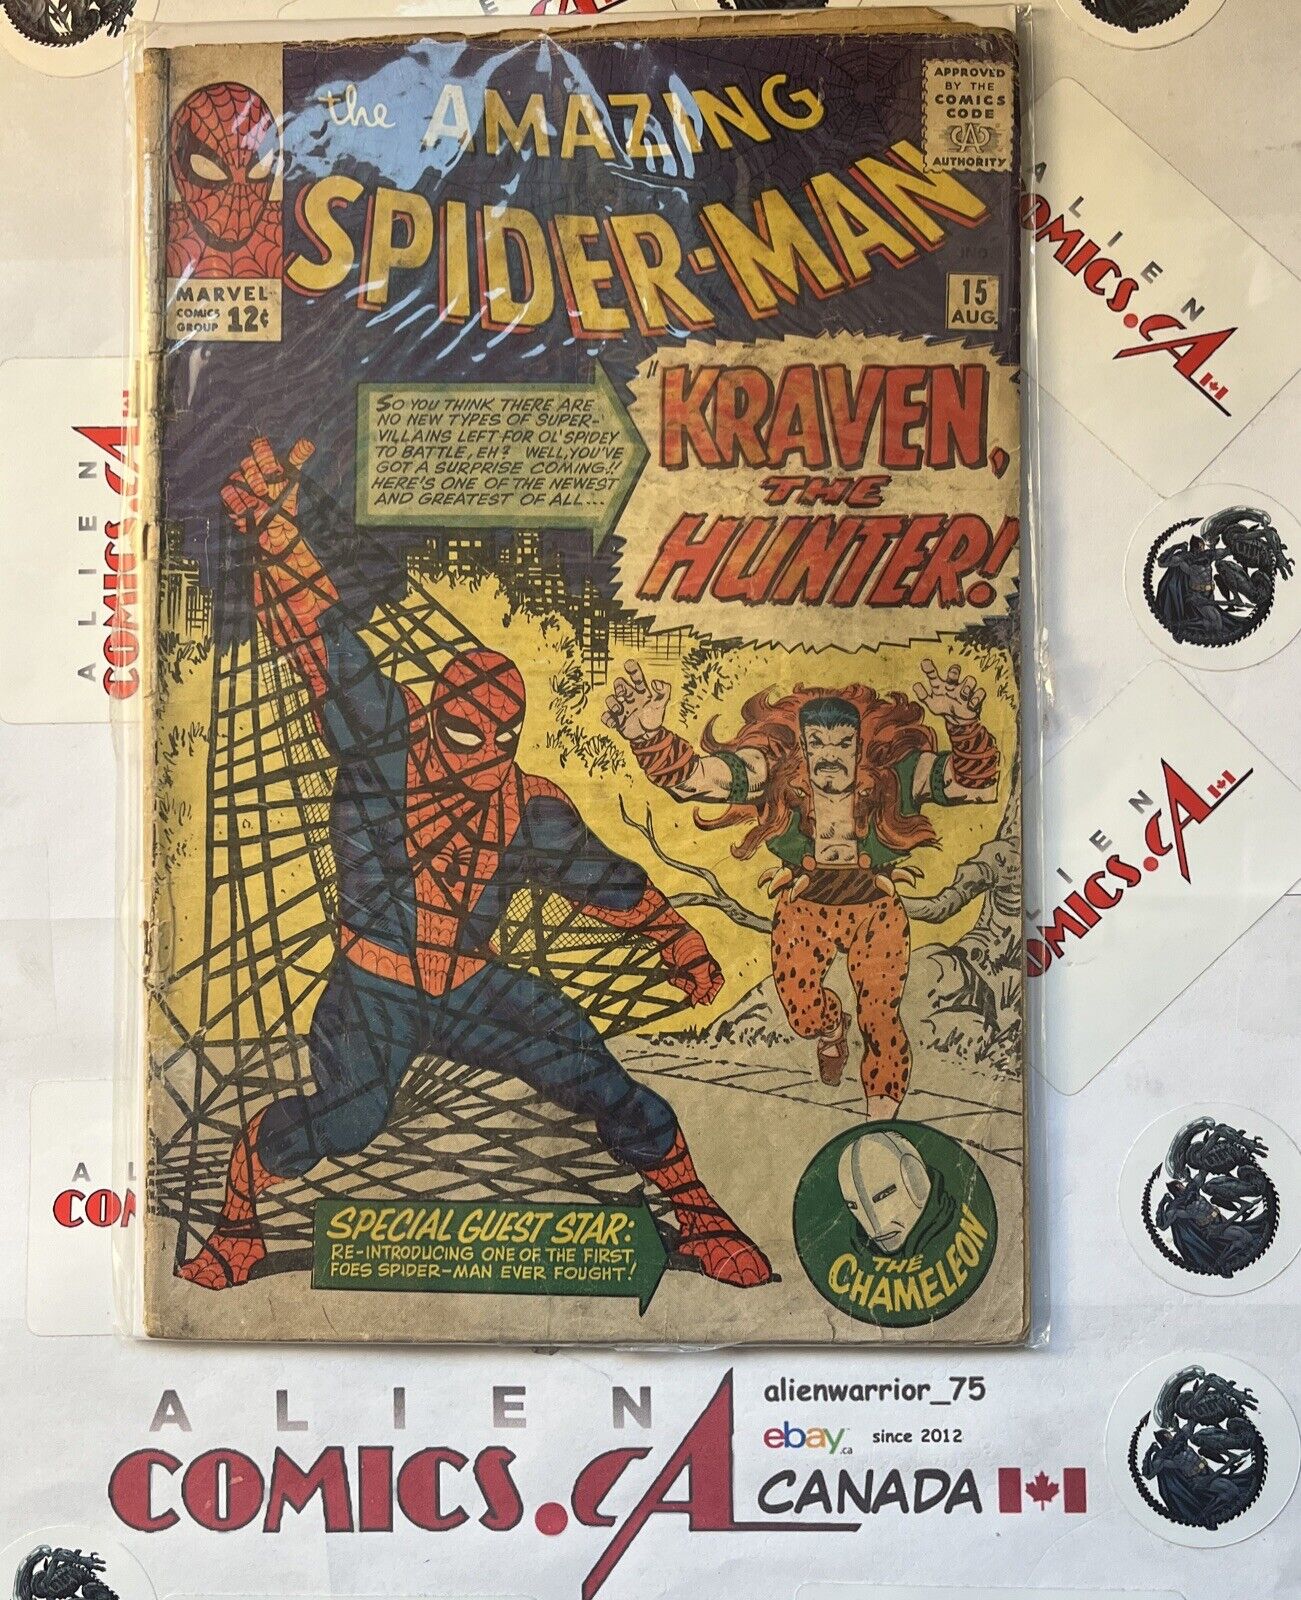 AMAZING SPIDER-MAN 15 1st app. Kraven the Hunter Complete Marvel 1966 LOW GRADE